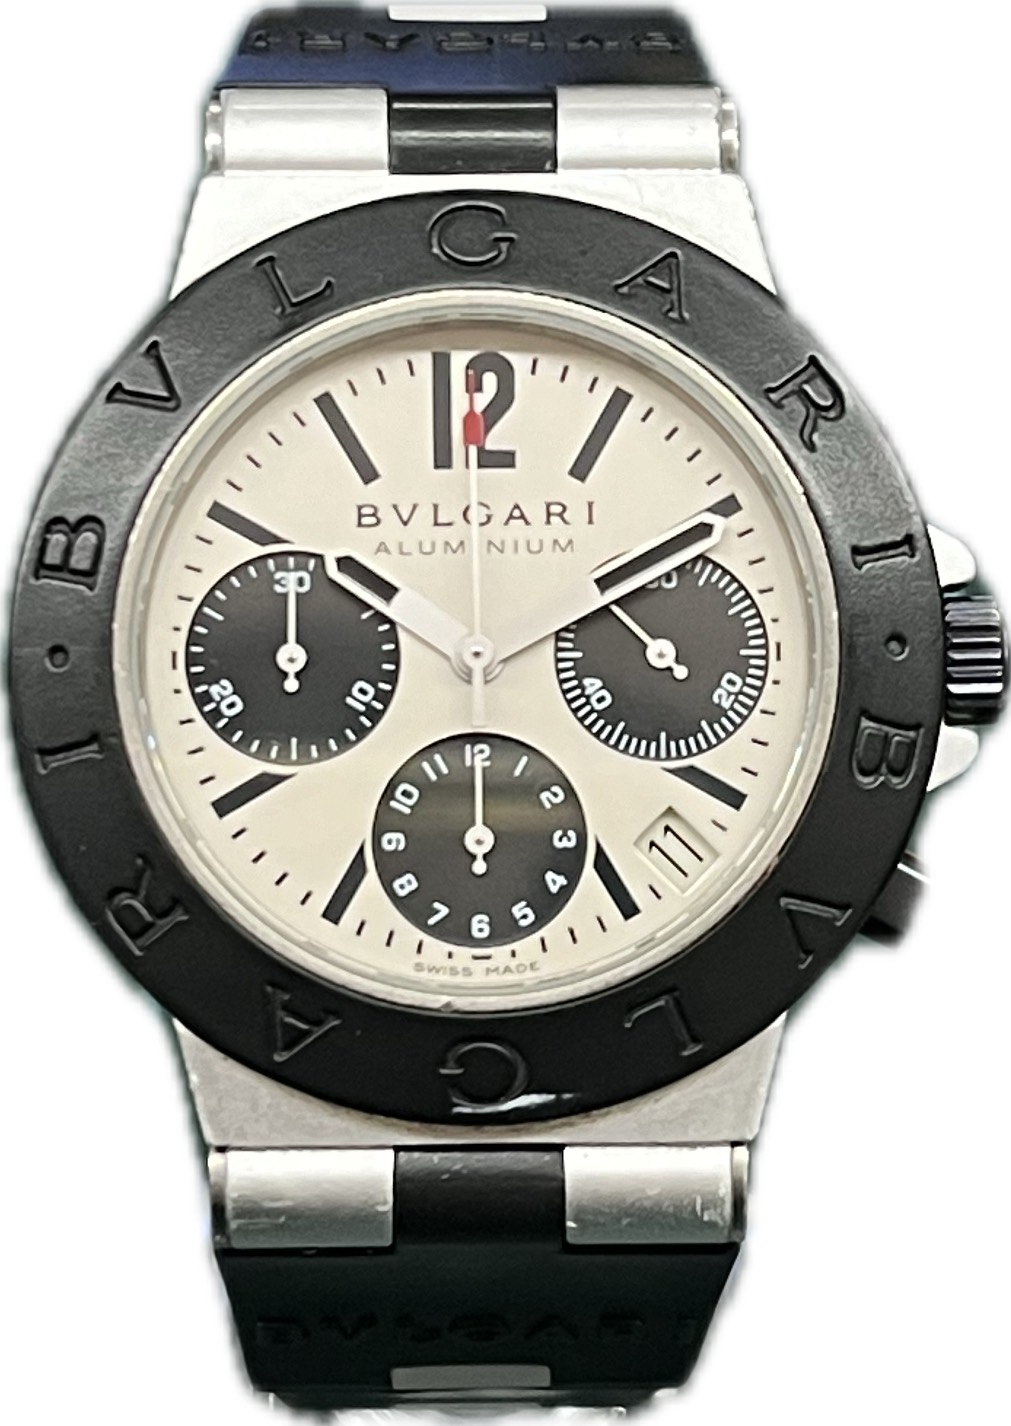 ▽BVLGARI ブルガリ 腕時計 自動巻き AC38TA お買取り価格をお教えし 